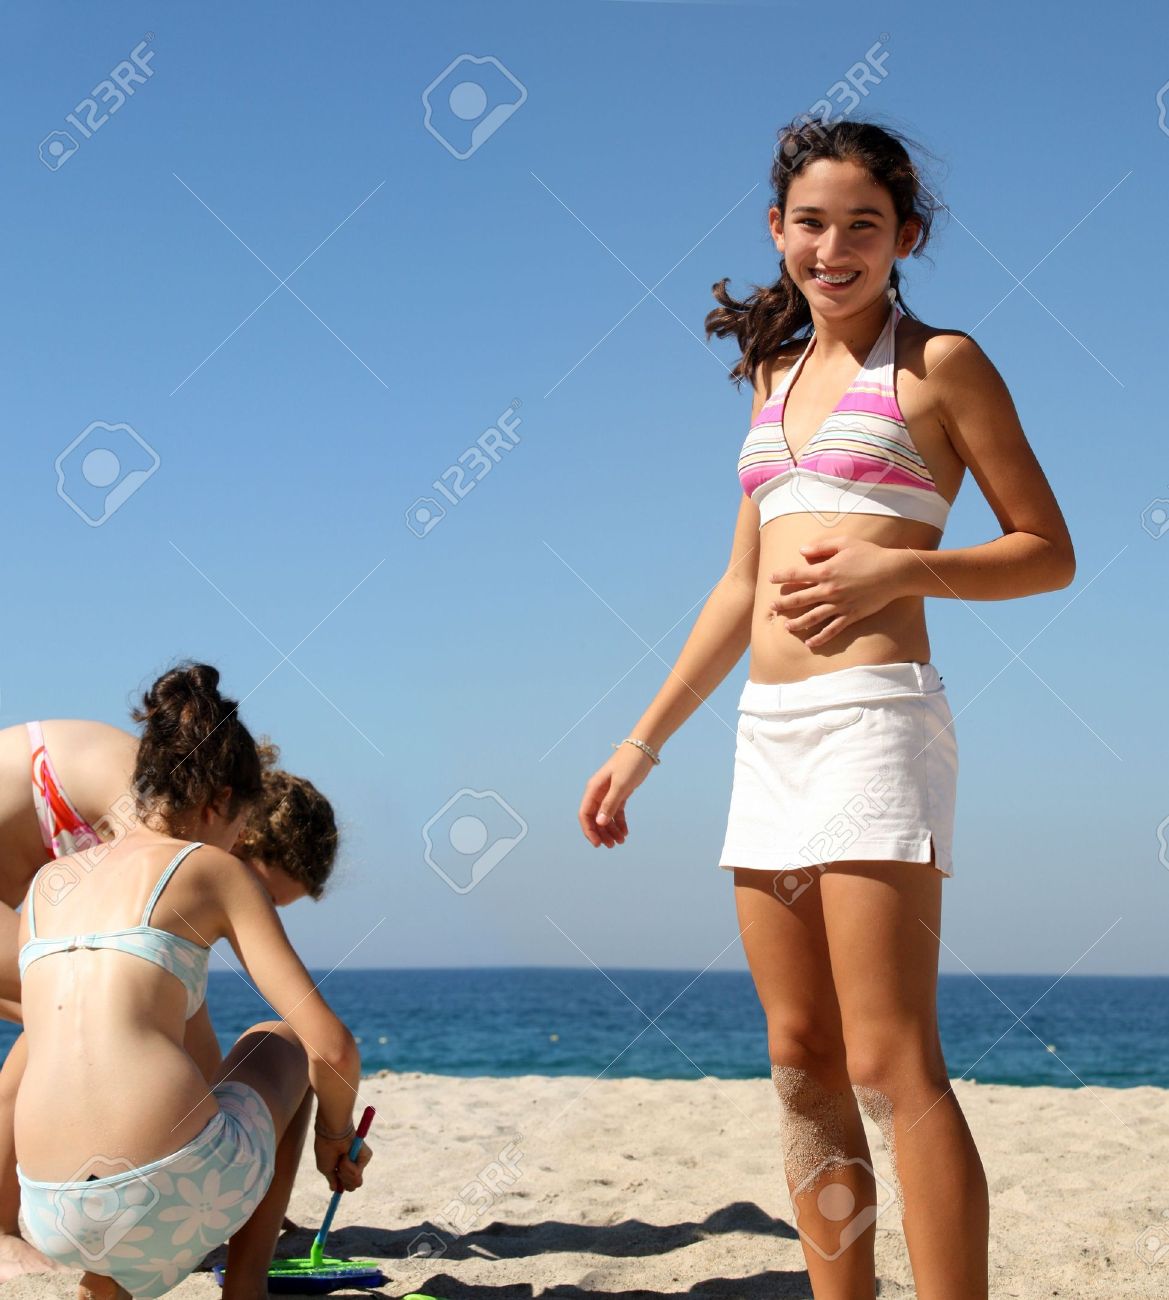 Teen girl beach pictures